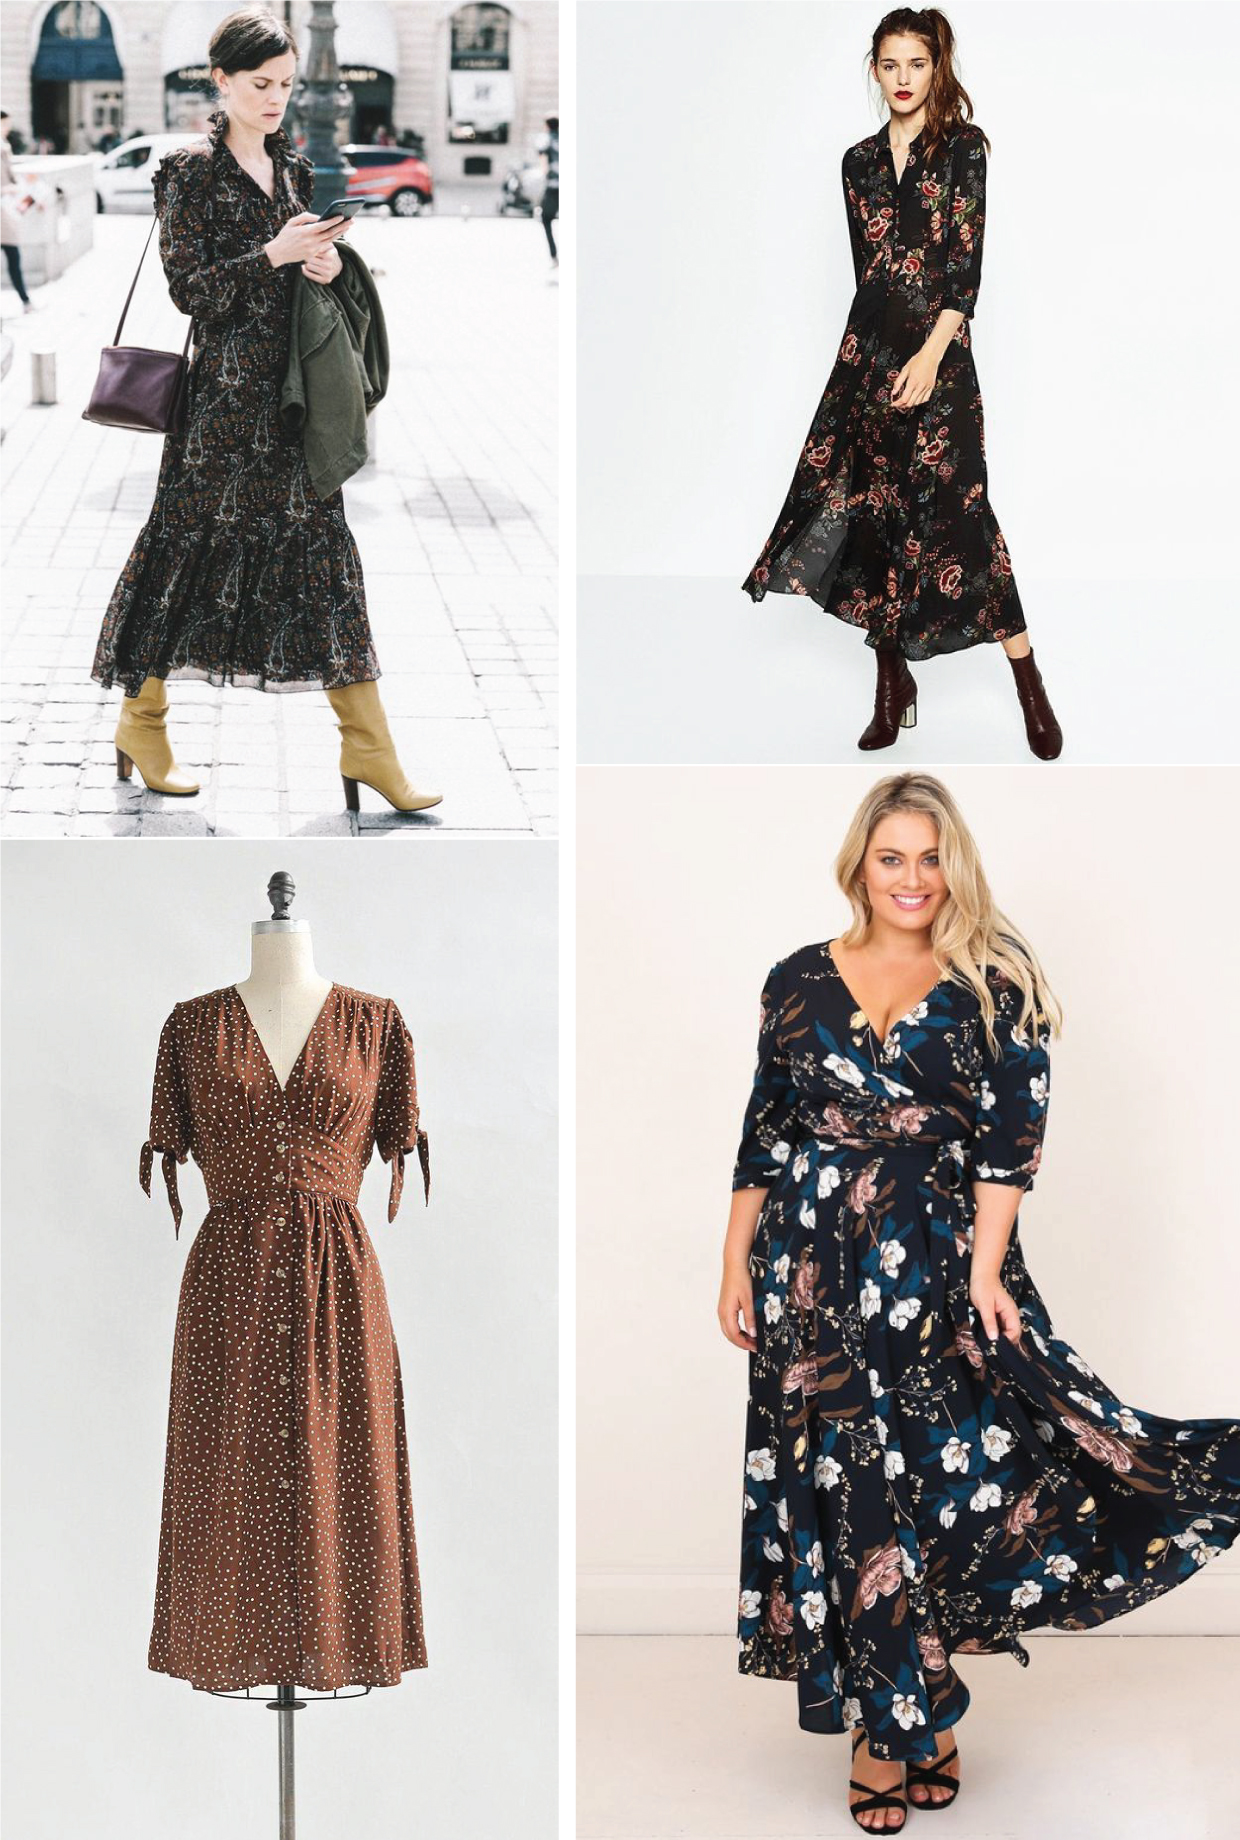 Inspiration for the Saint-Germain Wrap Dress | Blog | Oliver + S